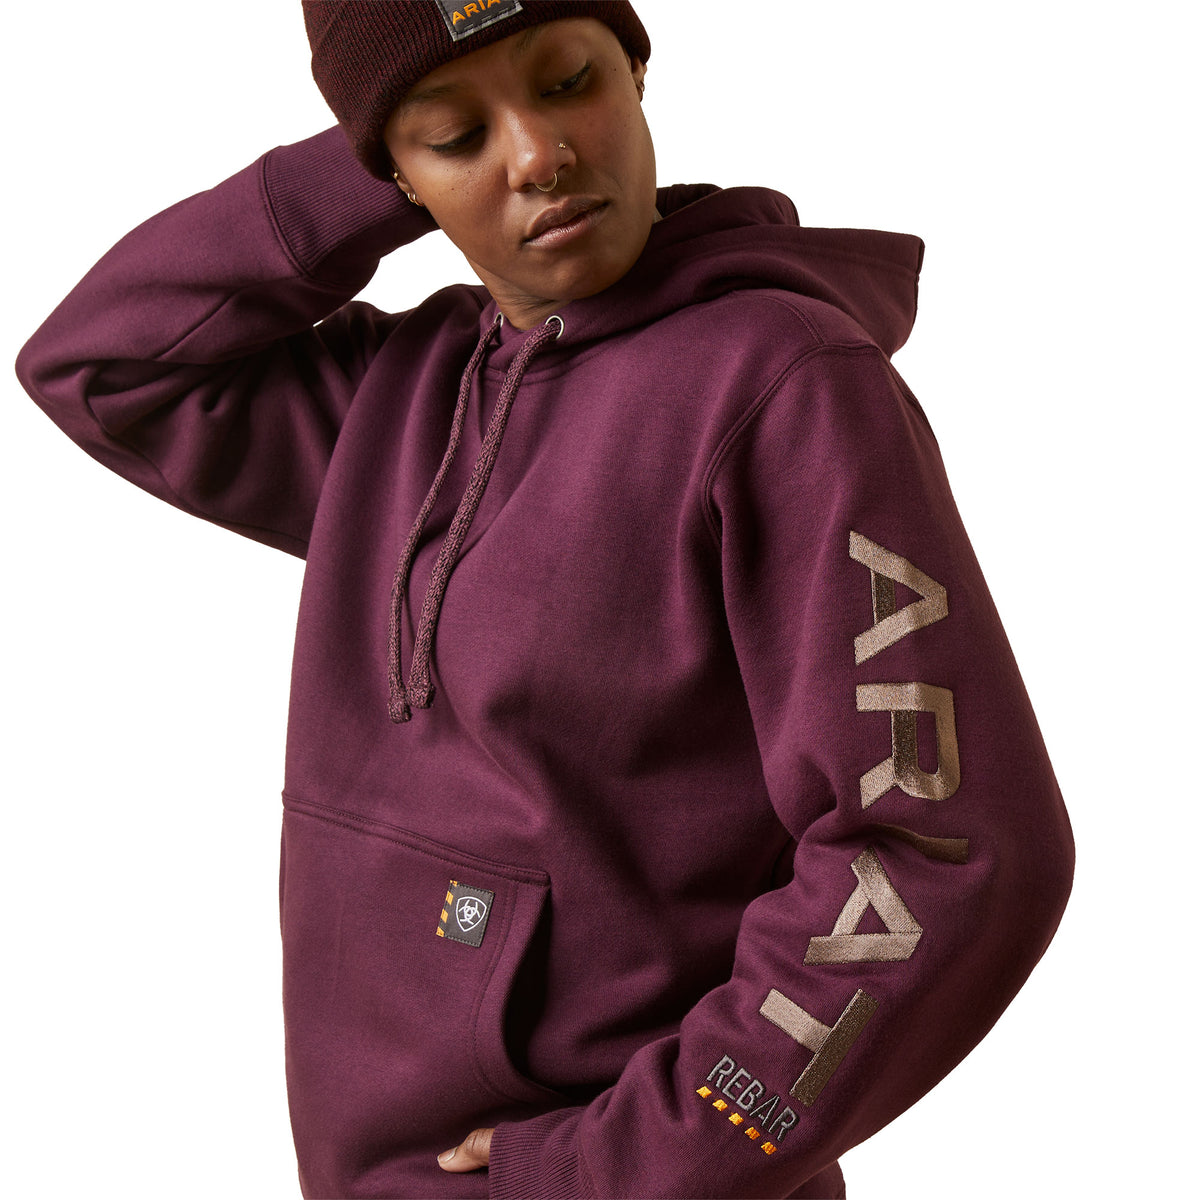 Ariat Womens Rebar Graphic Hood - Potent Purple/Peppercorn